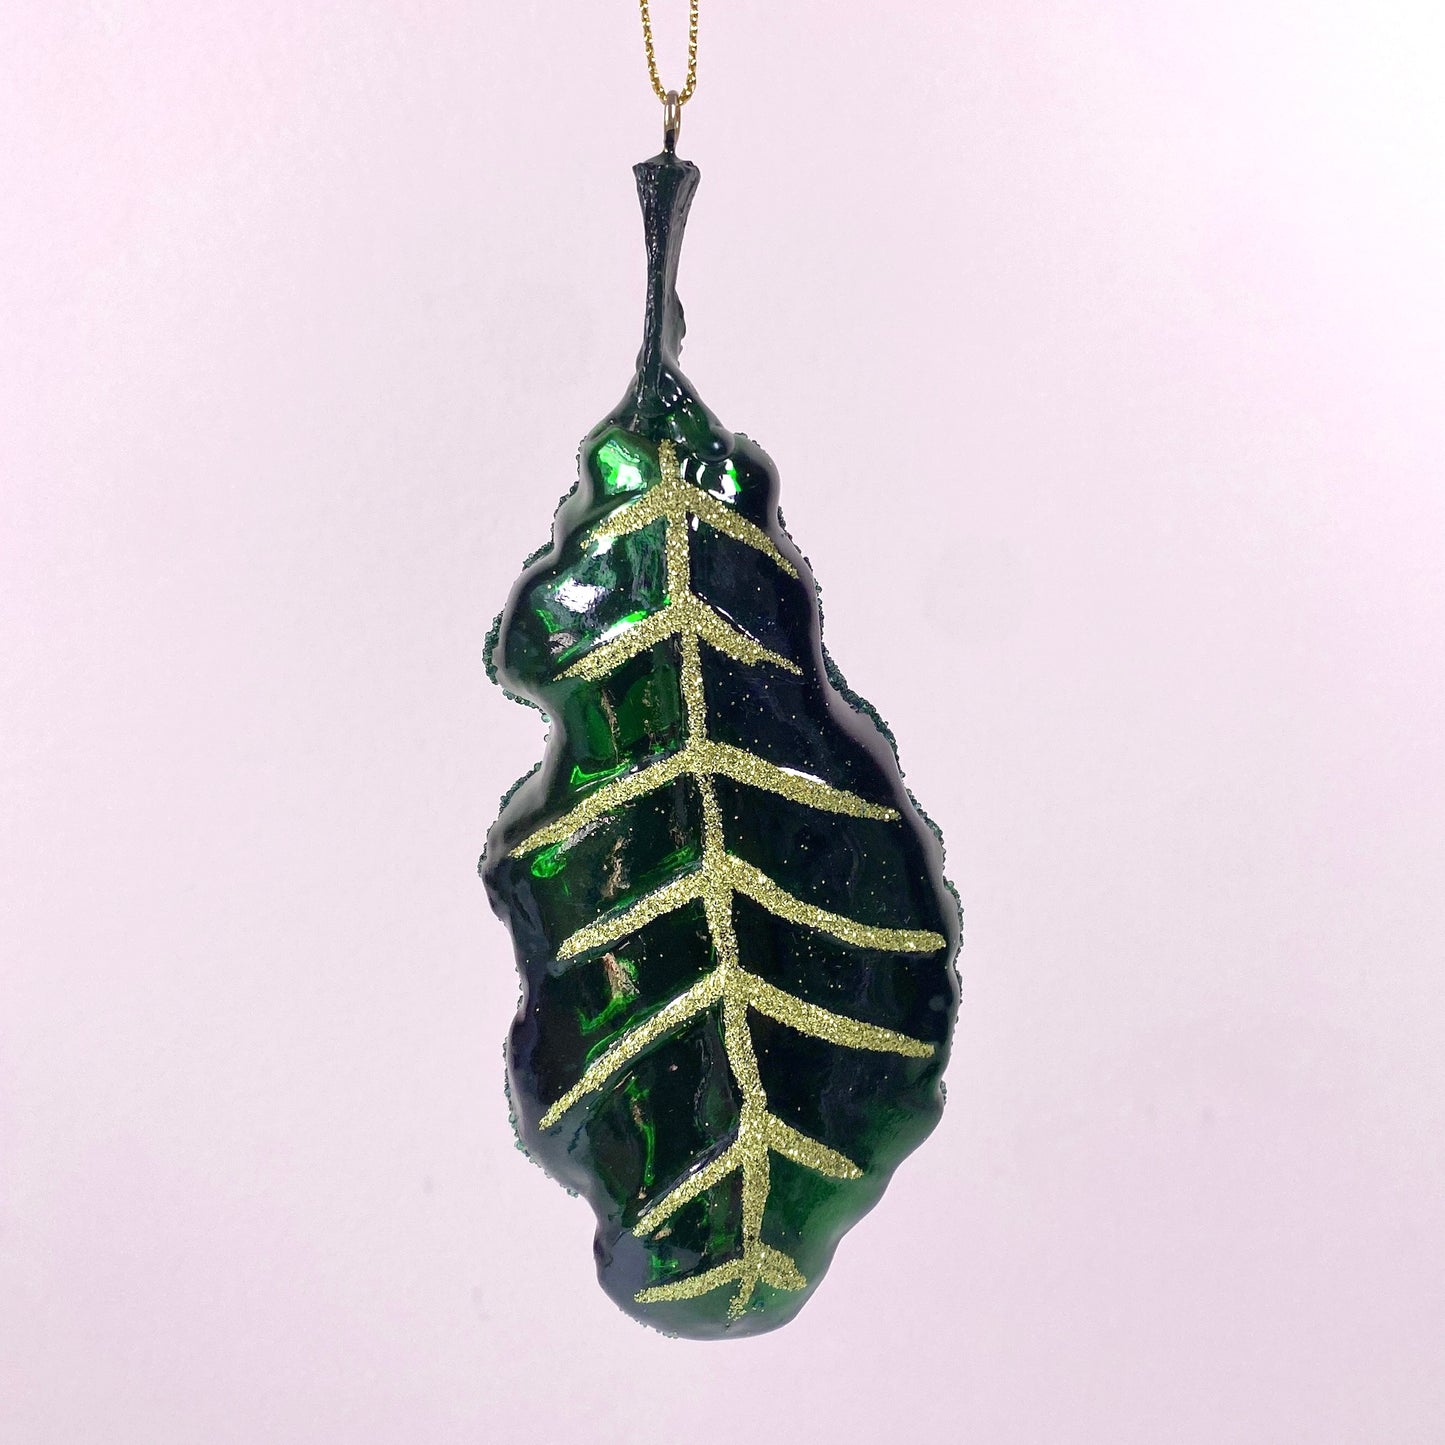 Kale Leaf Holiday Ornament